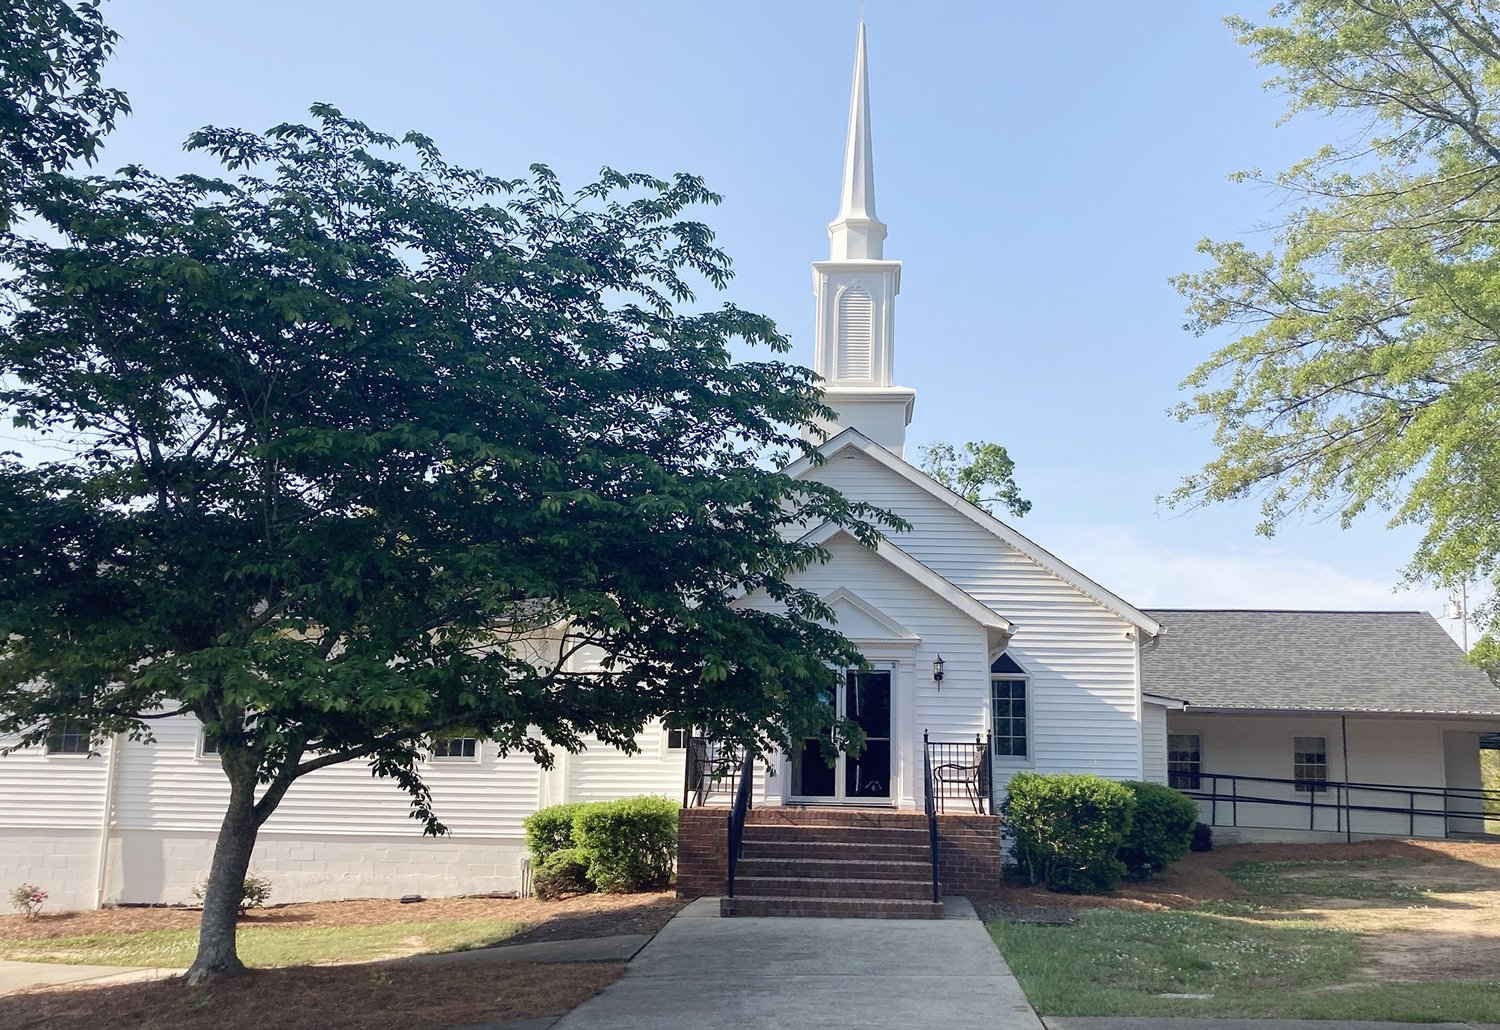 Flat Rock Baptist Church